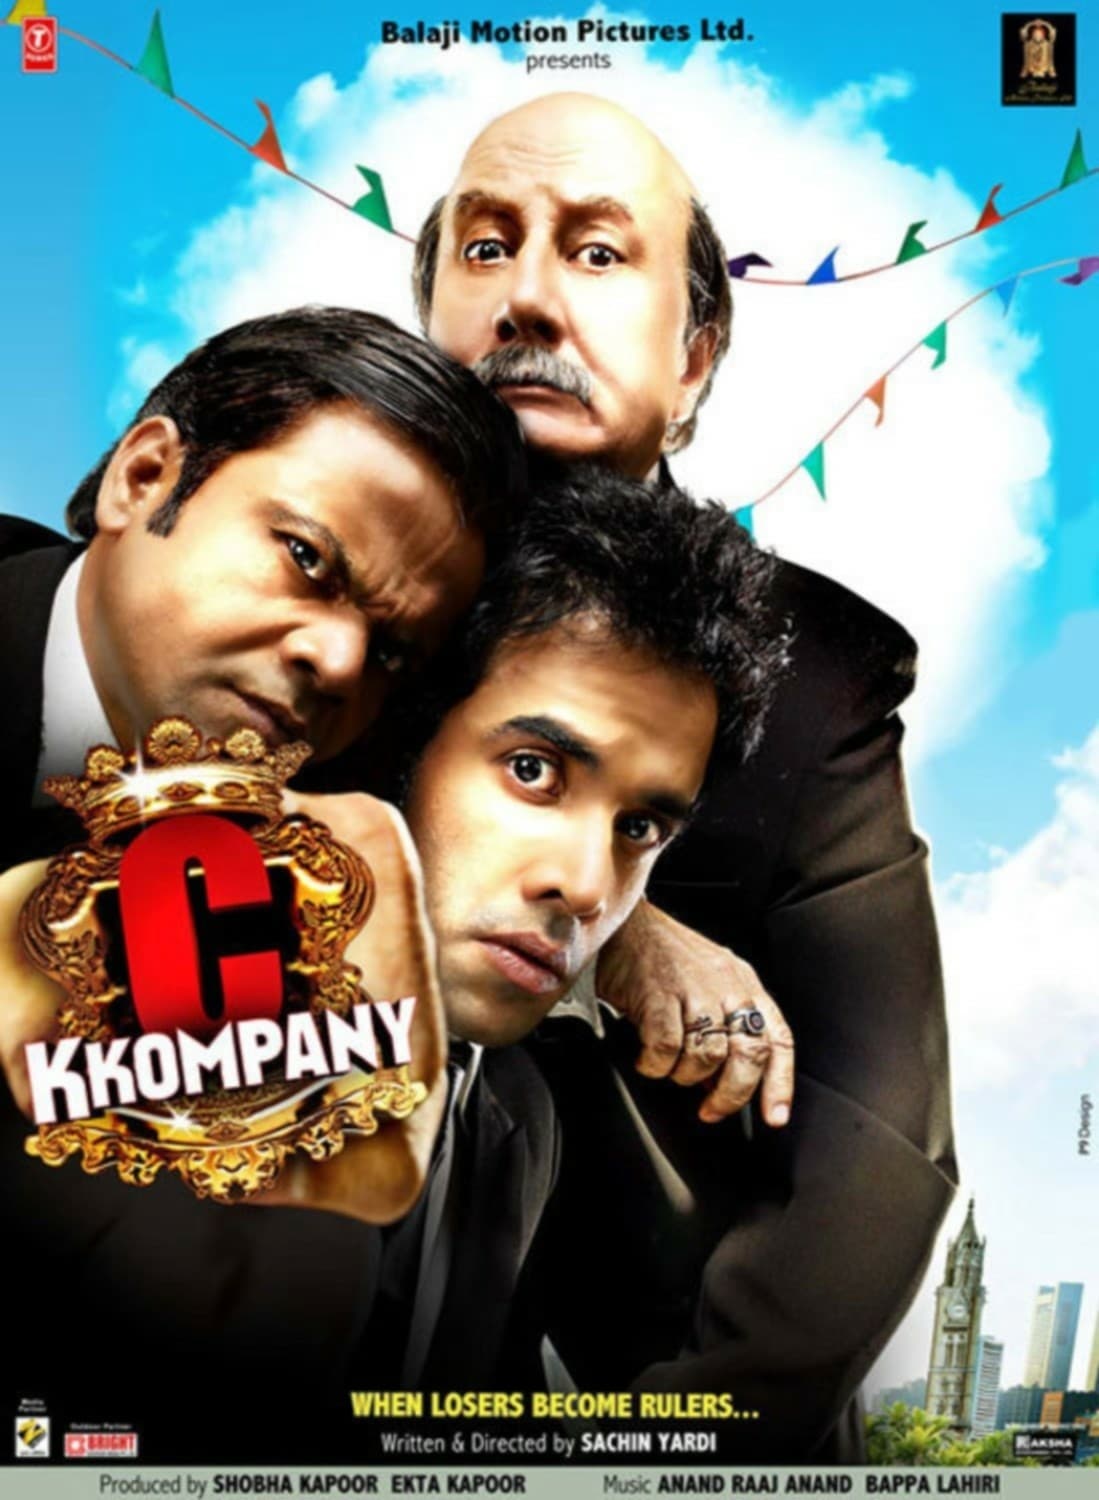 Poster for the movie "C Kkompany"